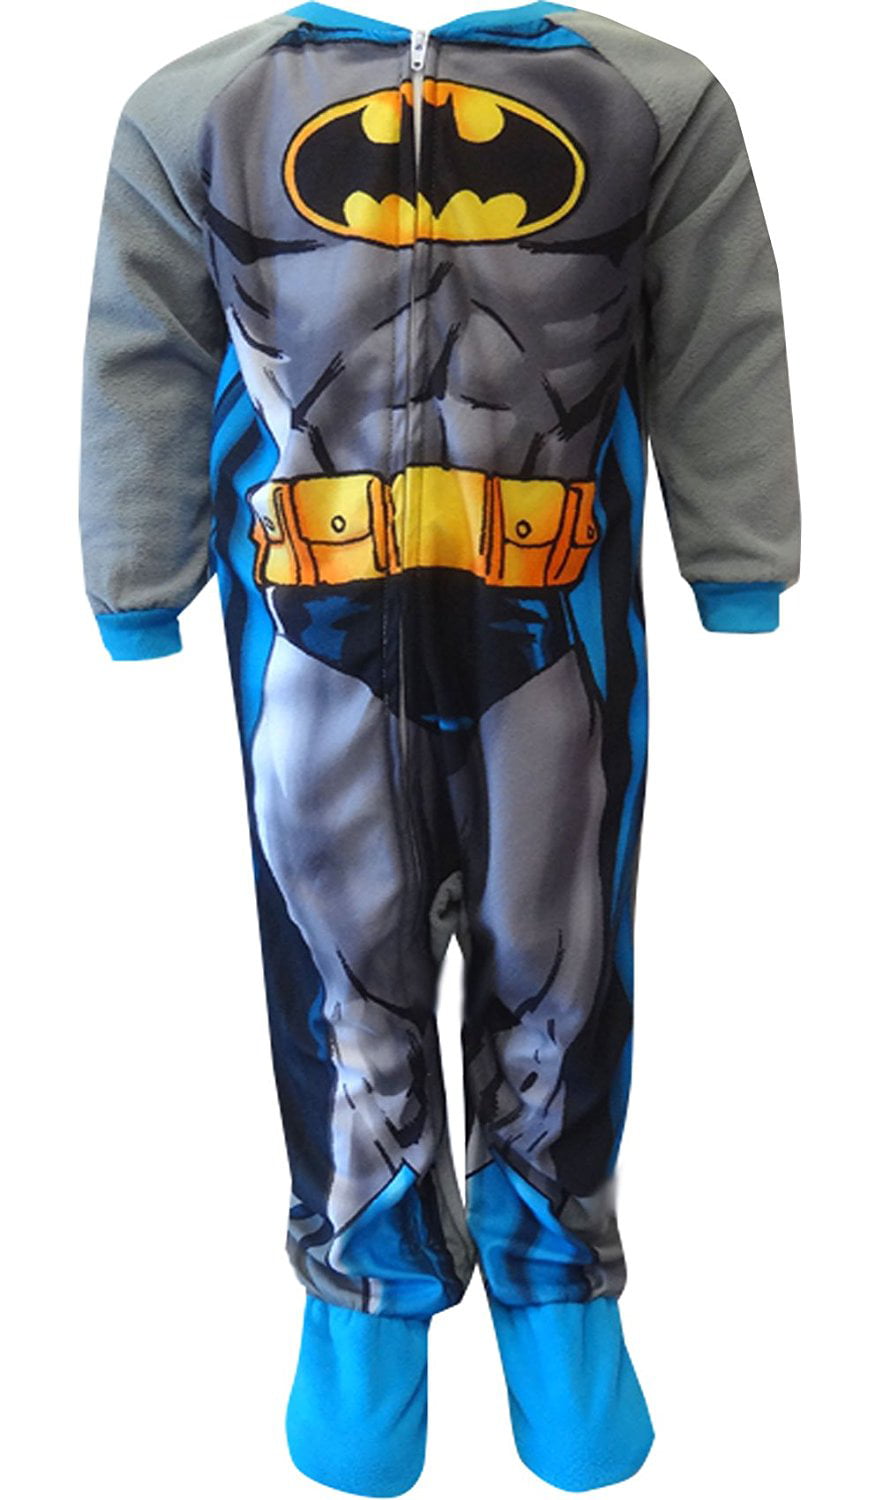 6/7 Batman Pajamas 1Pc Fleece Hooded Snuggle Suit Footless Warm Zip Up Boy's S